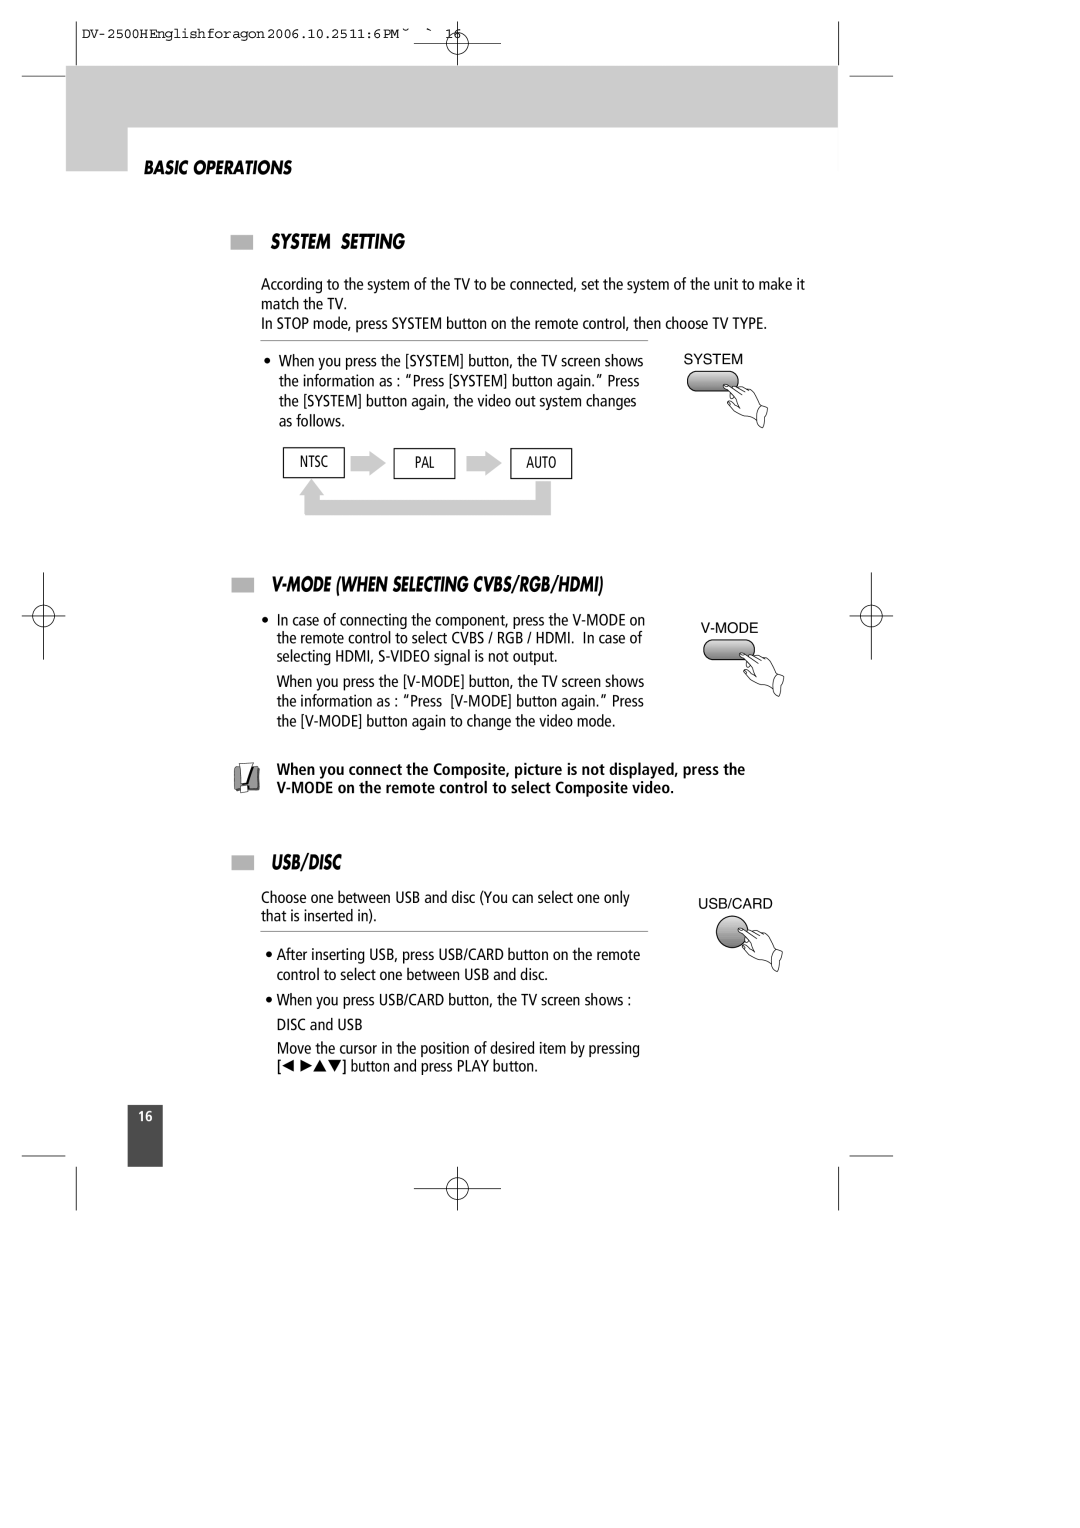 Kodak DV-2500H instruction manual System Setting, Mode When Selecting CVBS/RGB/HDMI, Usb/Disc 